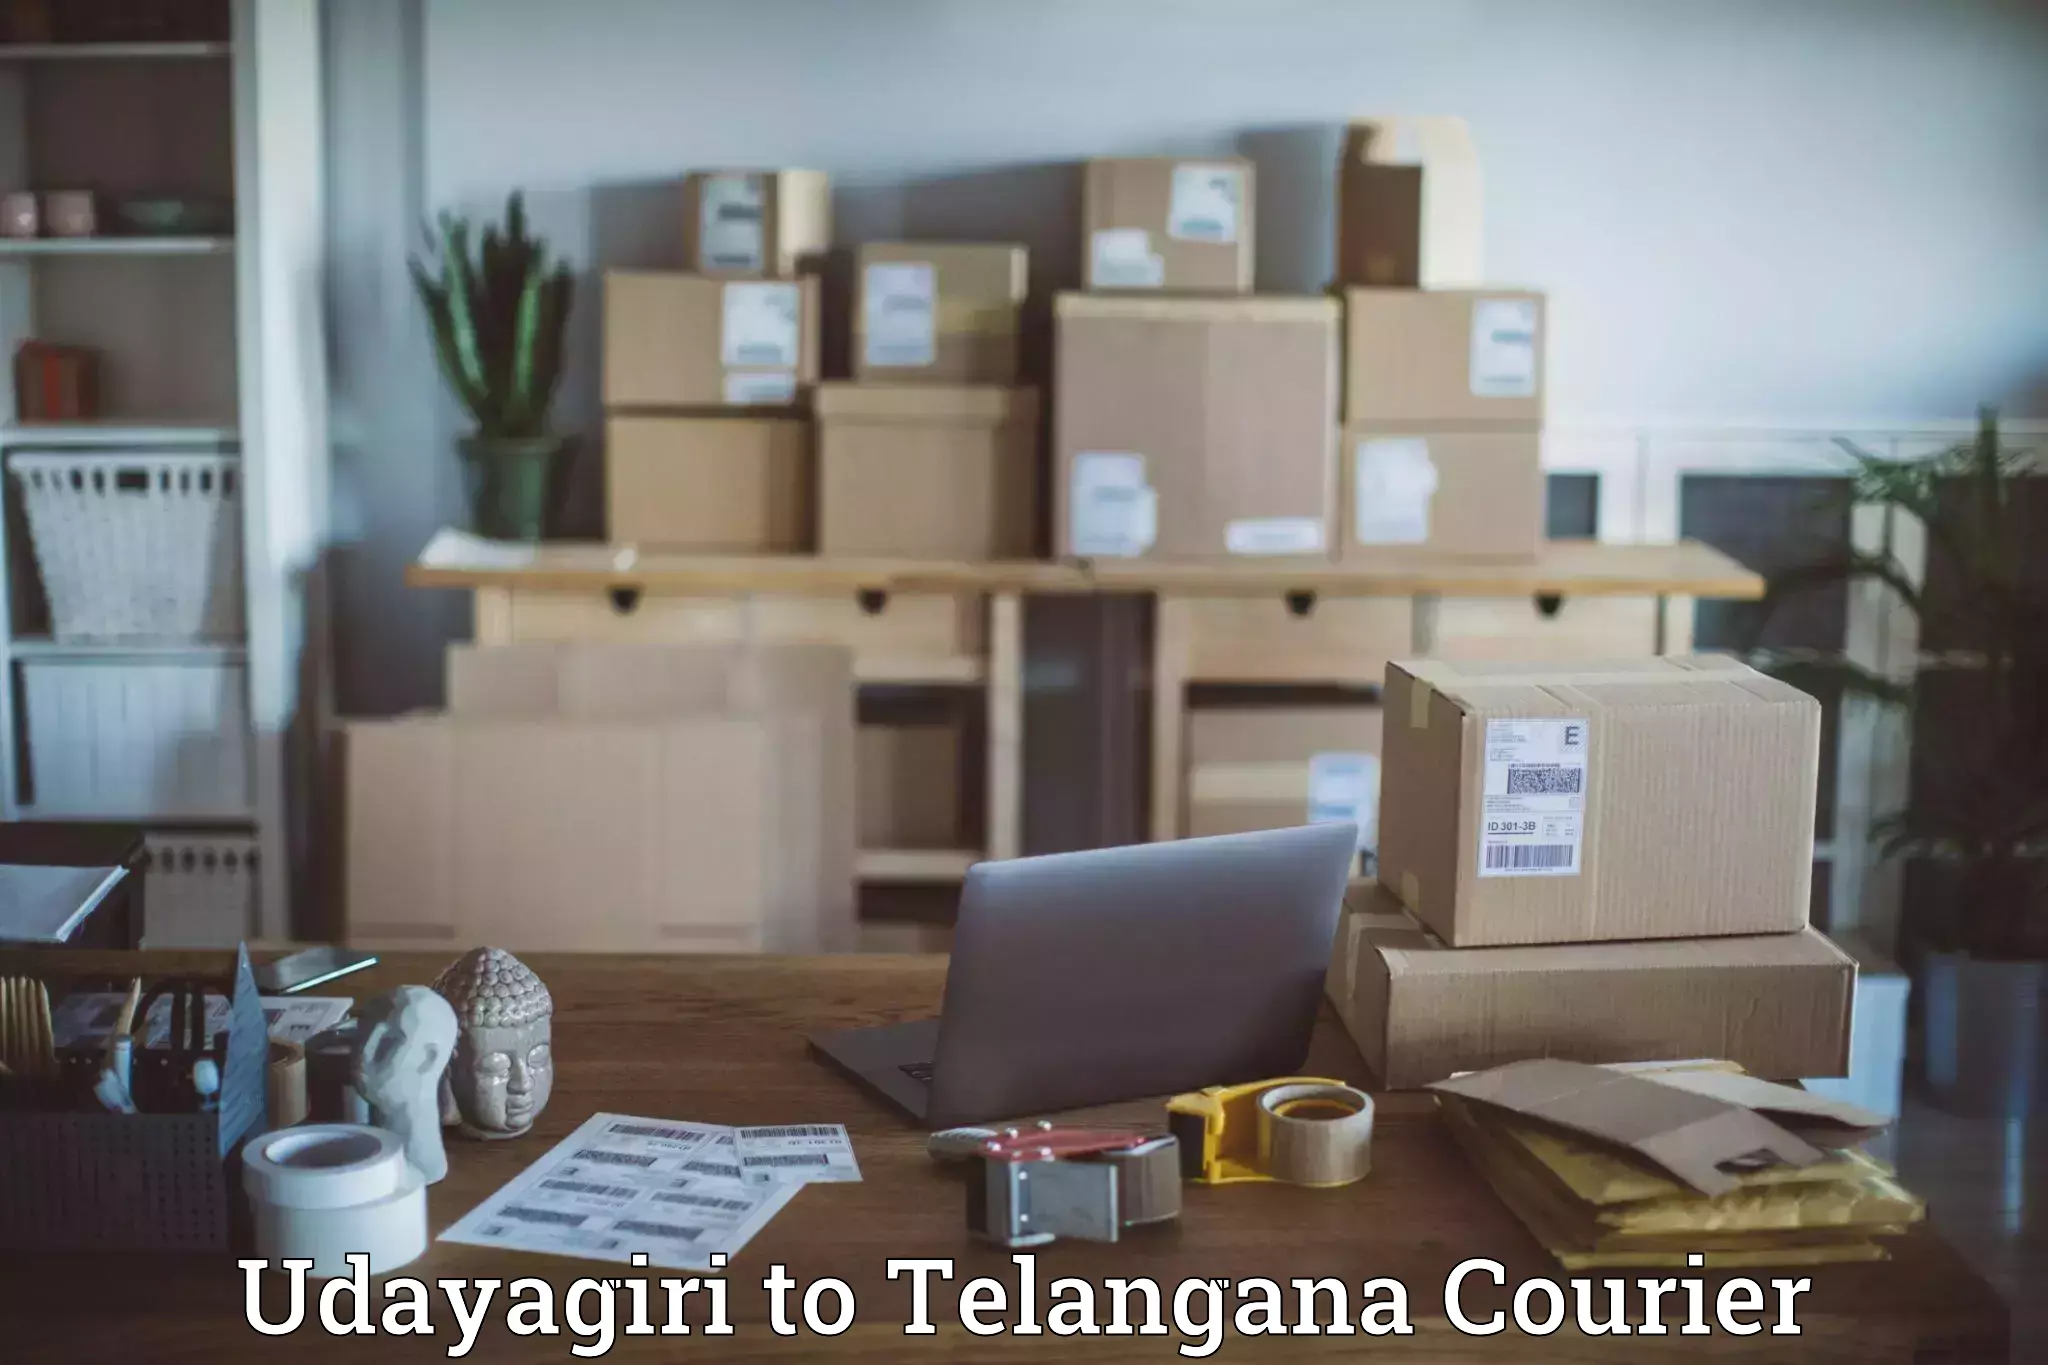 Door-to-door freight service Udayagiri to Telangana